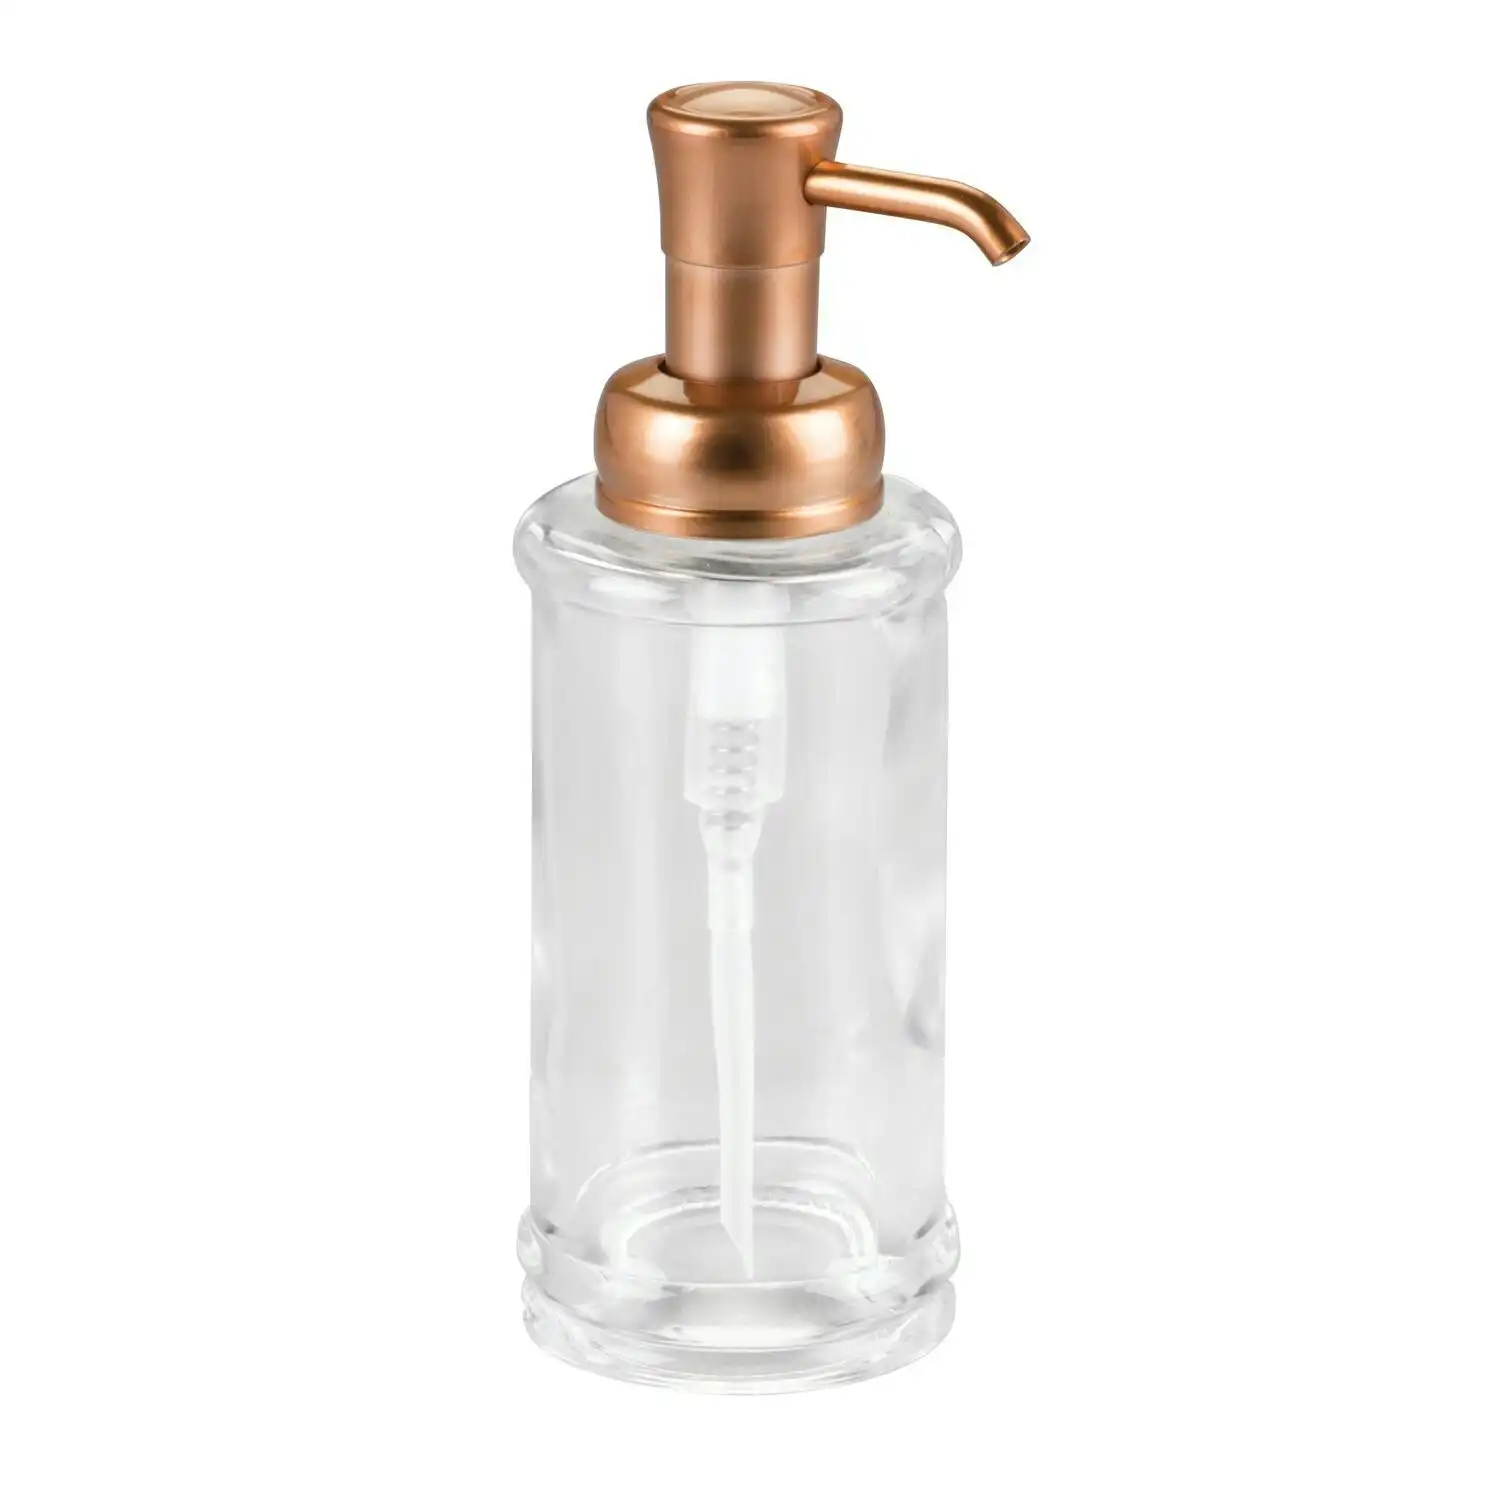 Idesign Hamilton Hand Liquid Soap Pump Dispenser Bathroom w/Head Copper 8.6x21cm